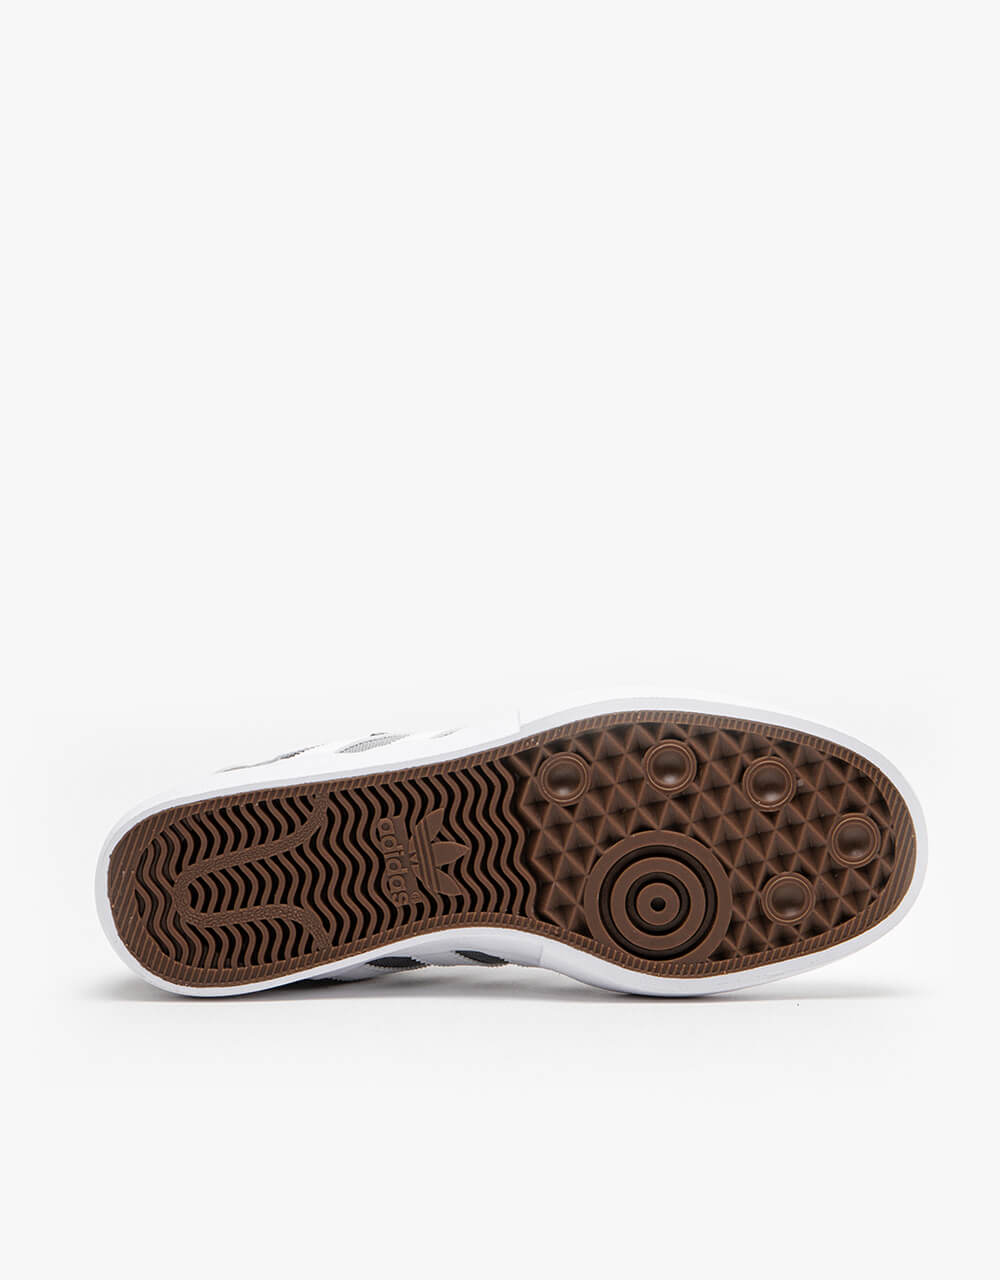 adidas Matchbreak Super Skate Shoes - Grey/White/Gum